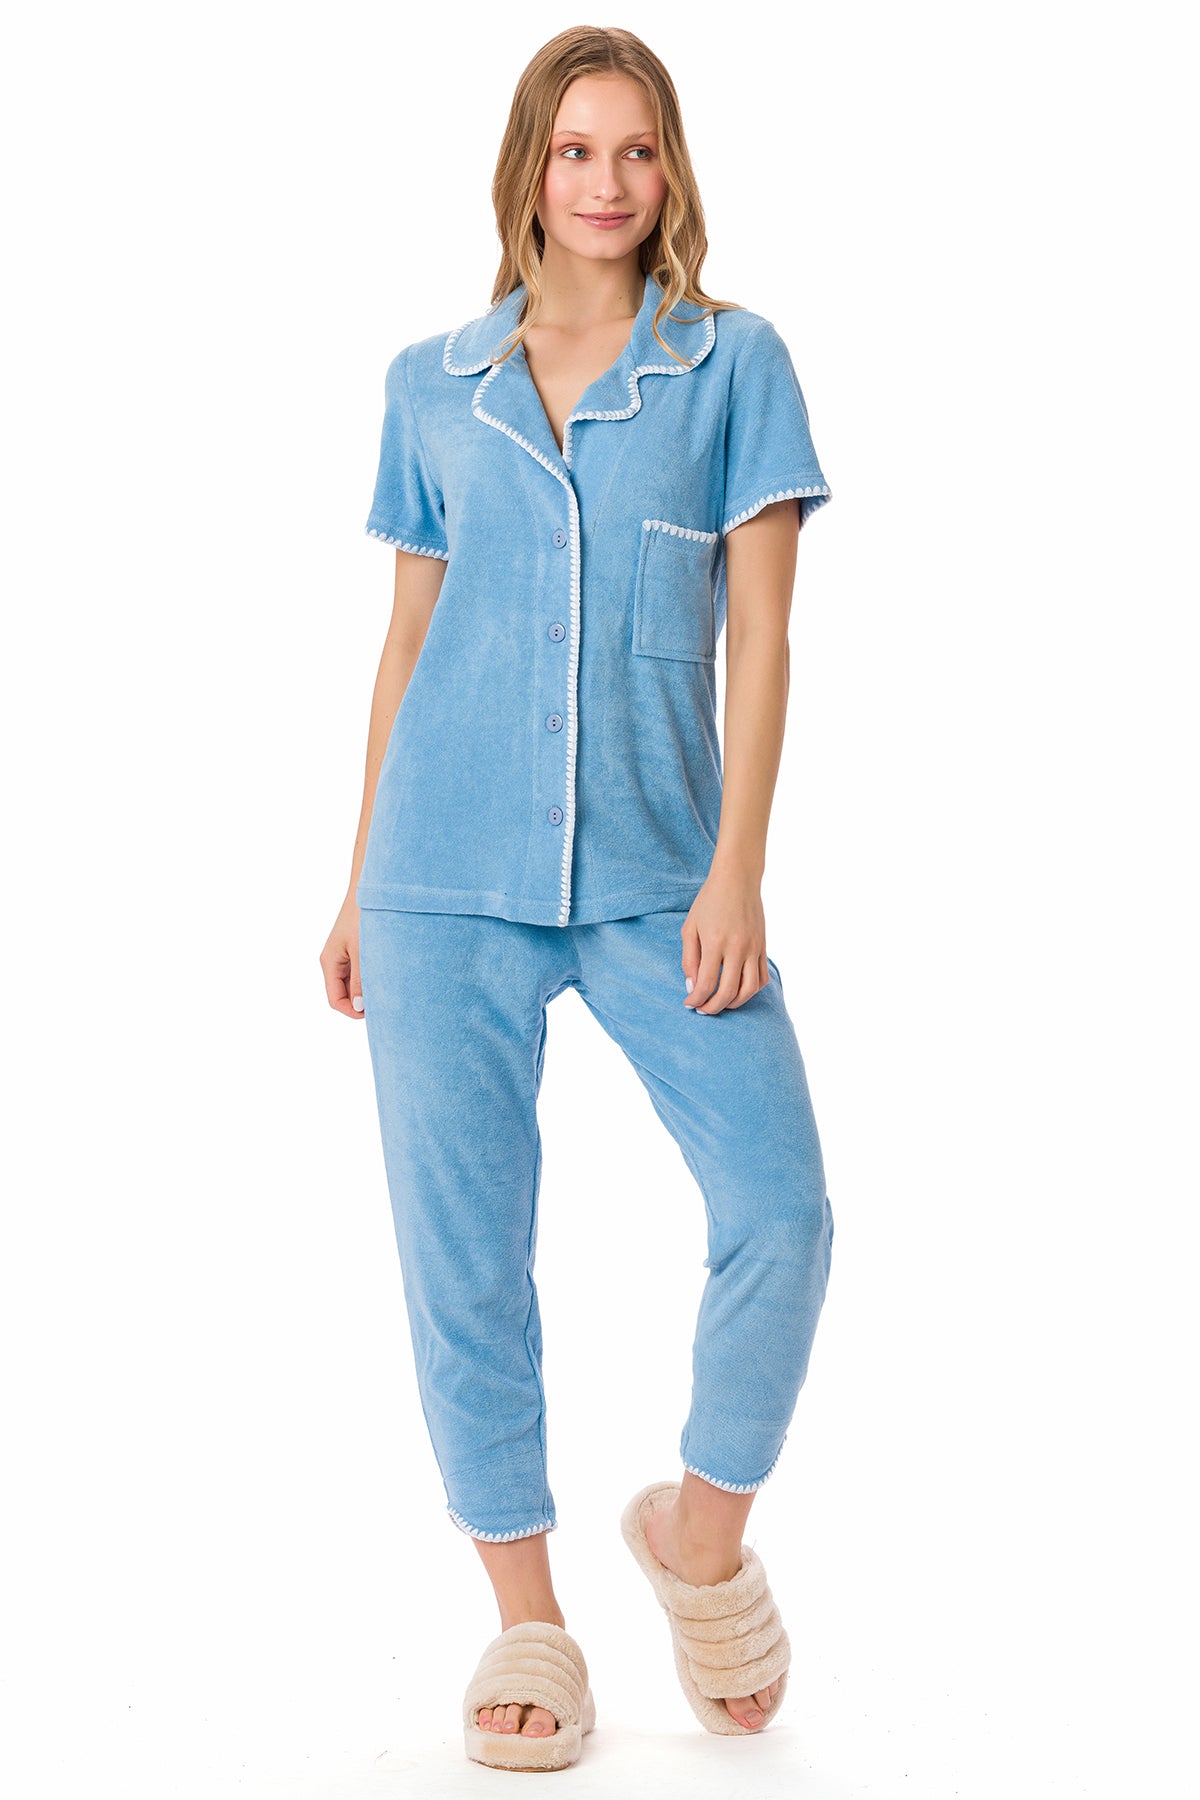 Suvi NYC women's 3-piece short-pants and jacket pajama set . Terry Cotton